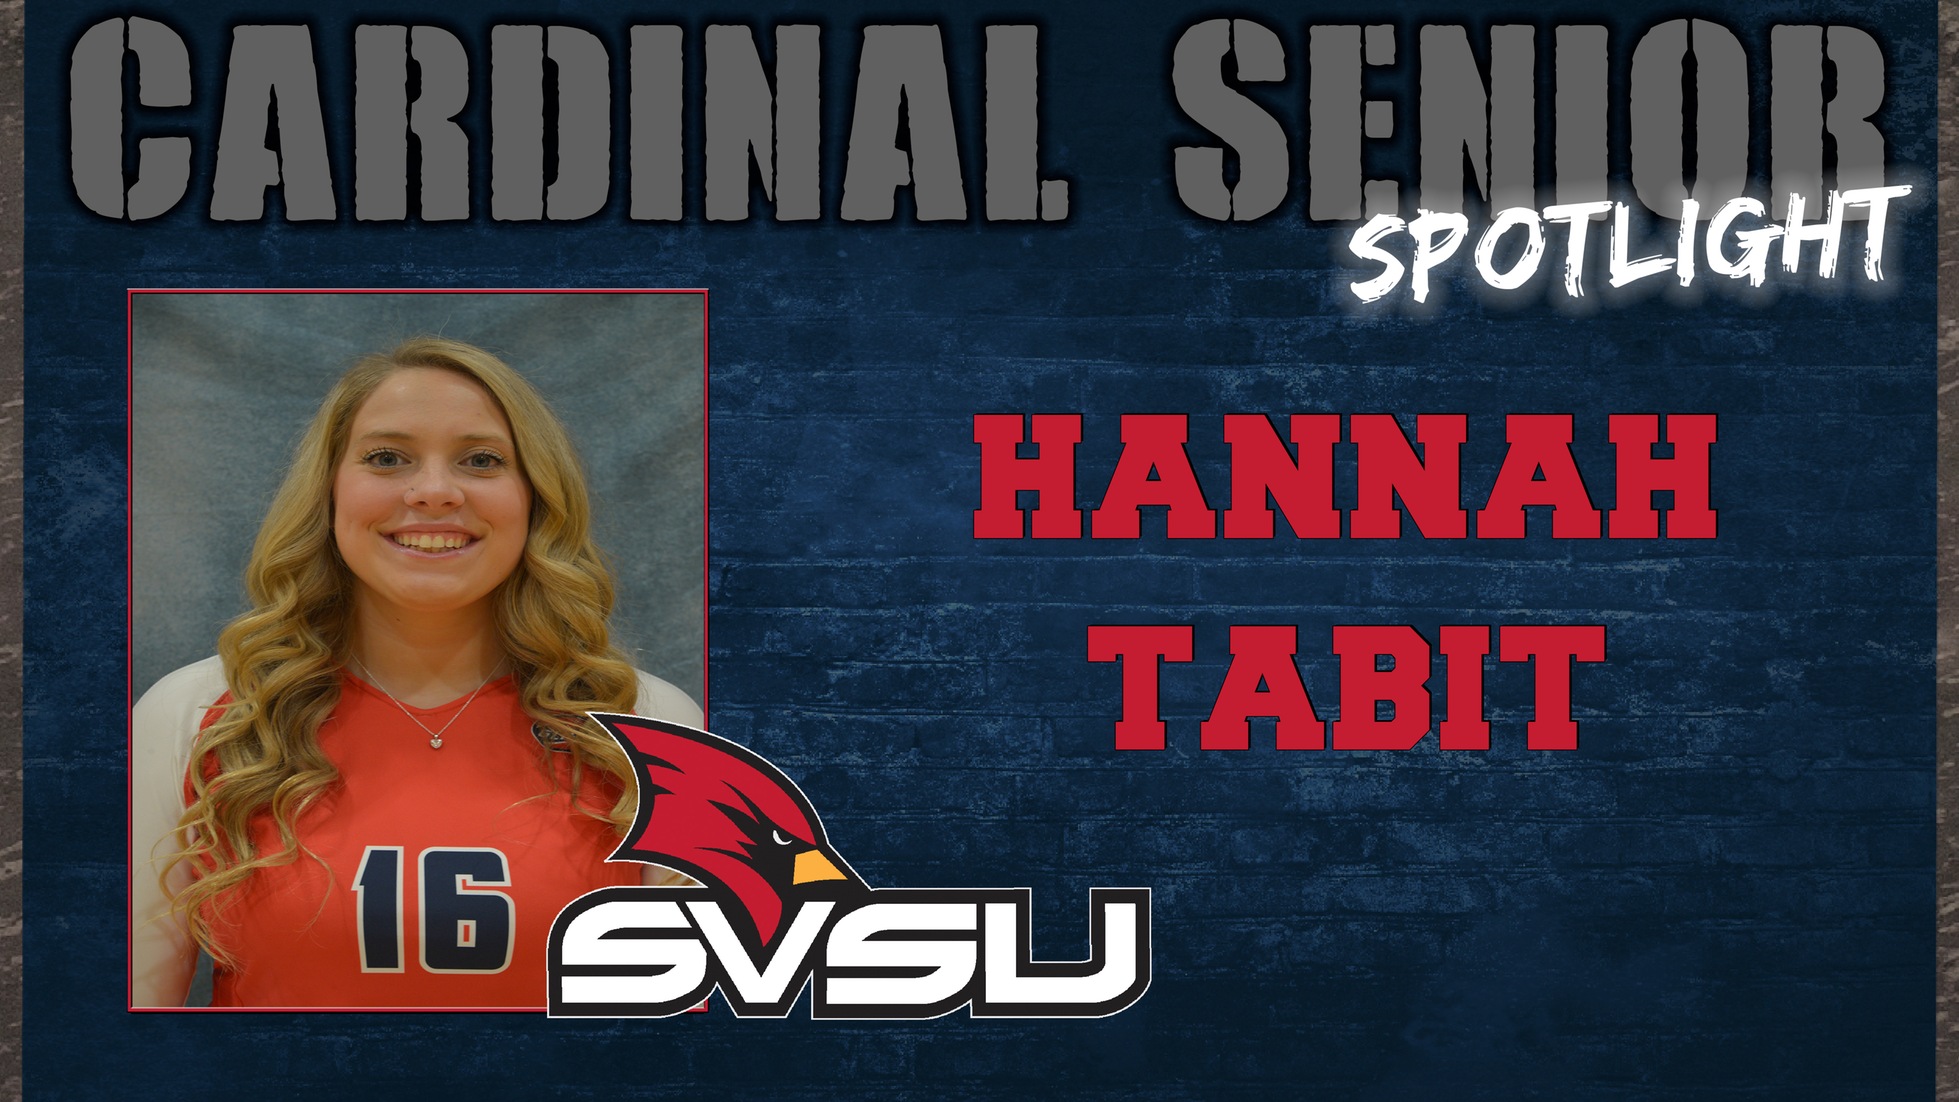 SVSU Cardinal Senior Spotlight - Hannah Tabit